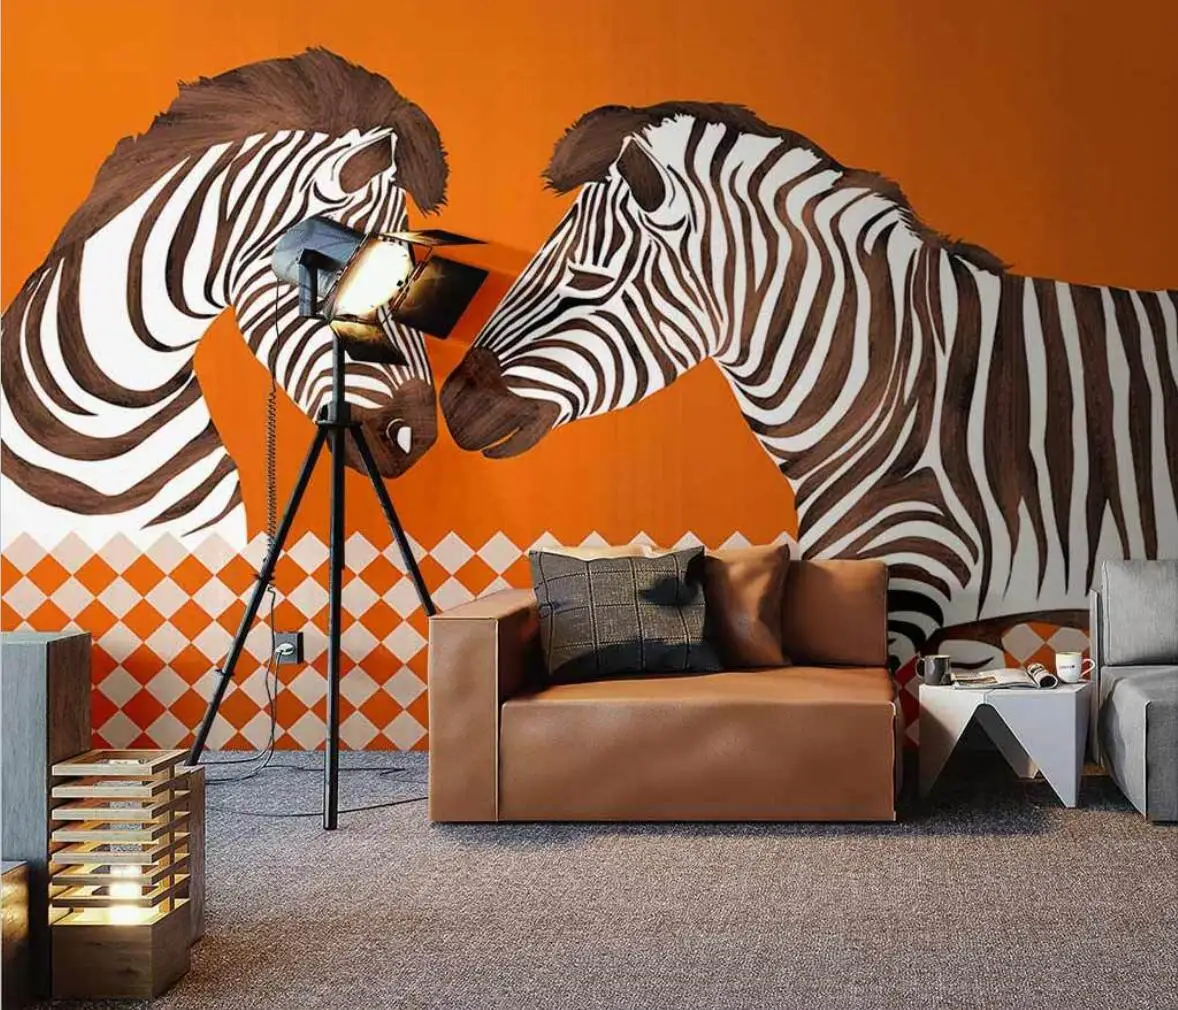 

Custom papel de parede 3D Animal Zebra Wallpaper photo Mural wall papers Home Decor 3d wallpaper Living Room Bedroom Tapestry